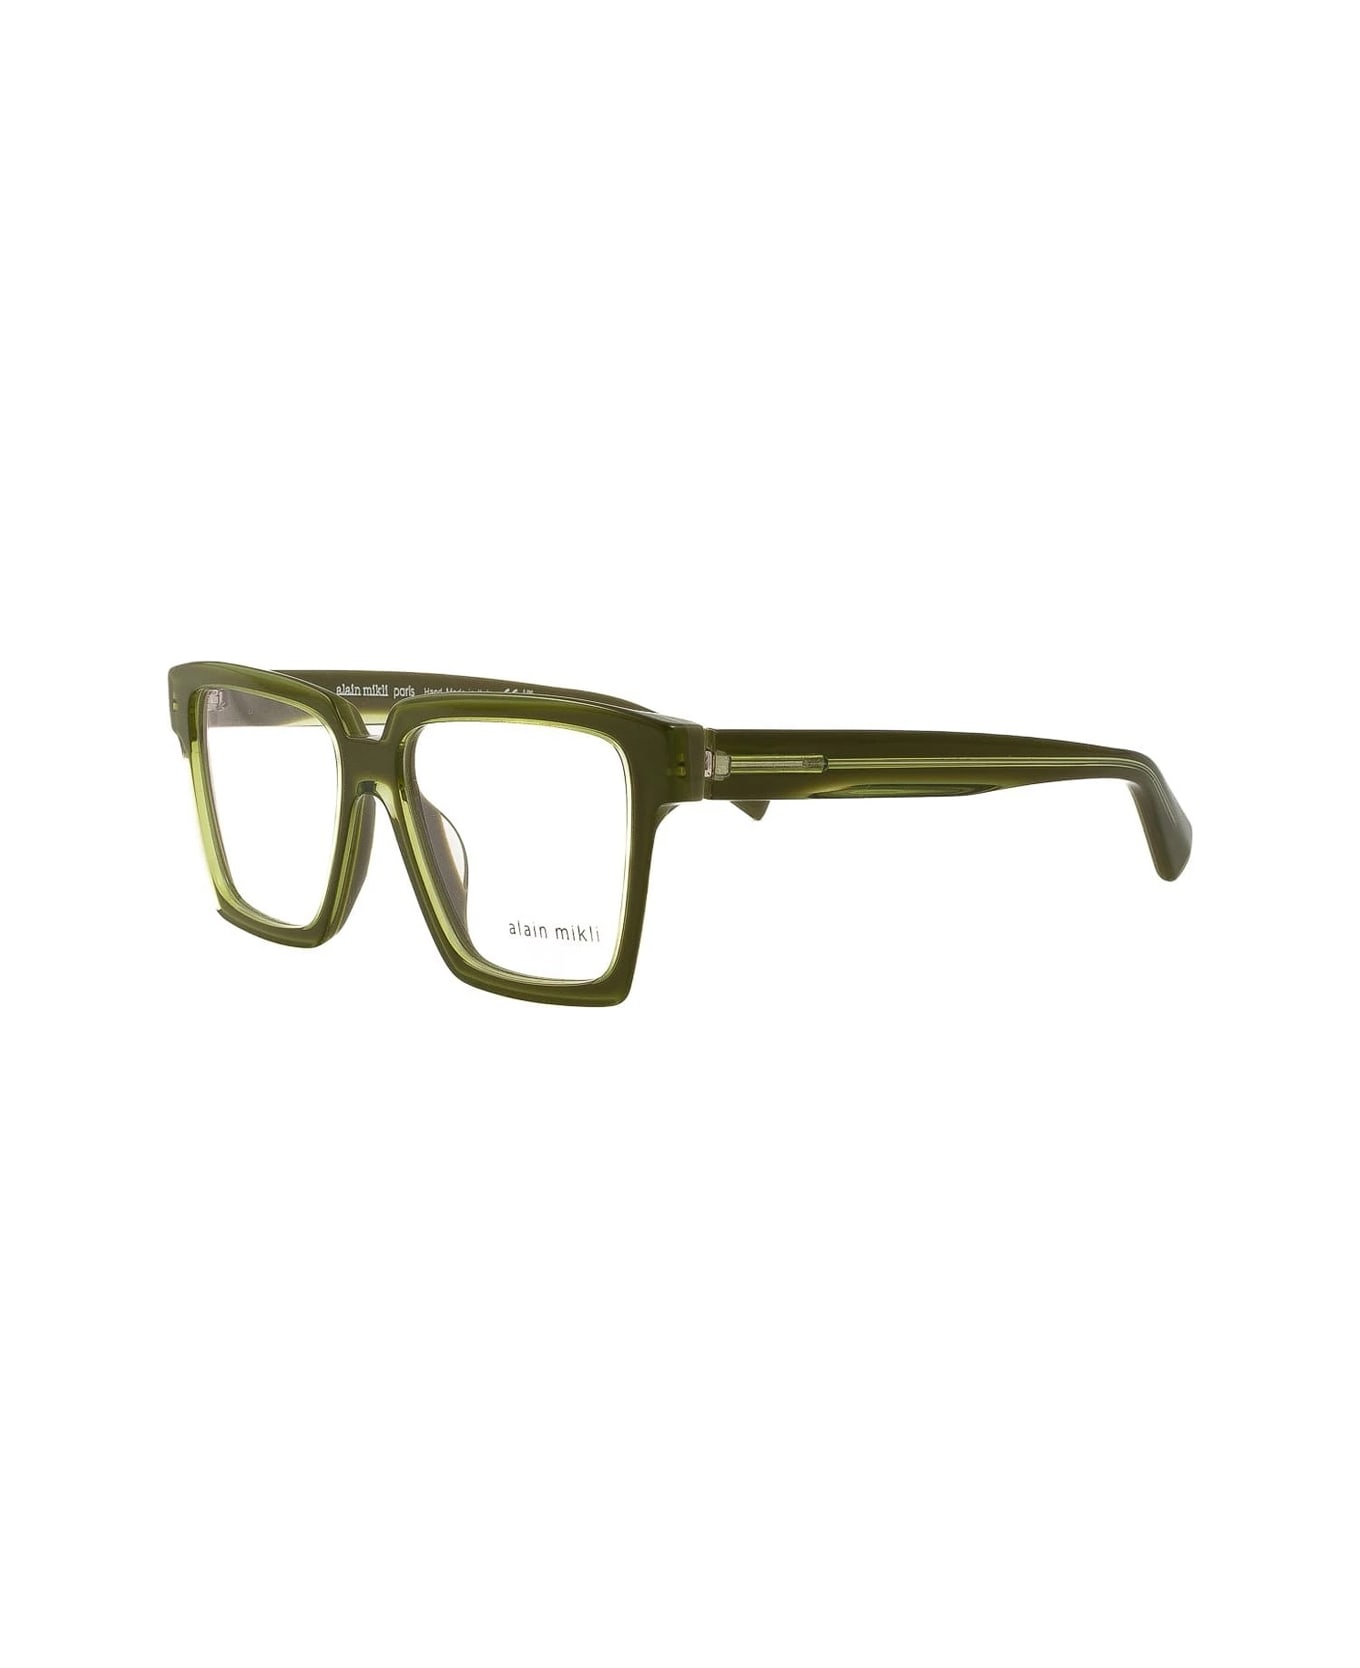 Alain Mikli A03162 006 Glasses - Verde